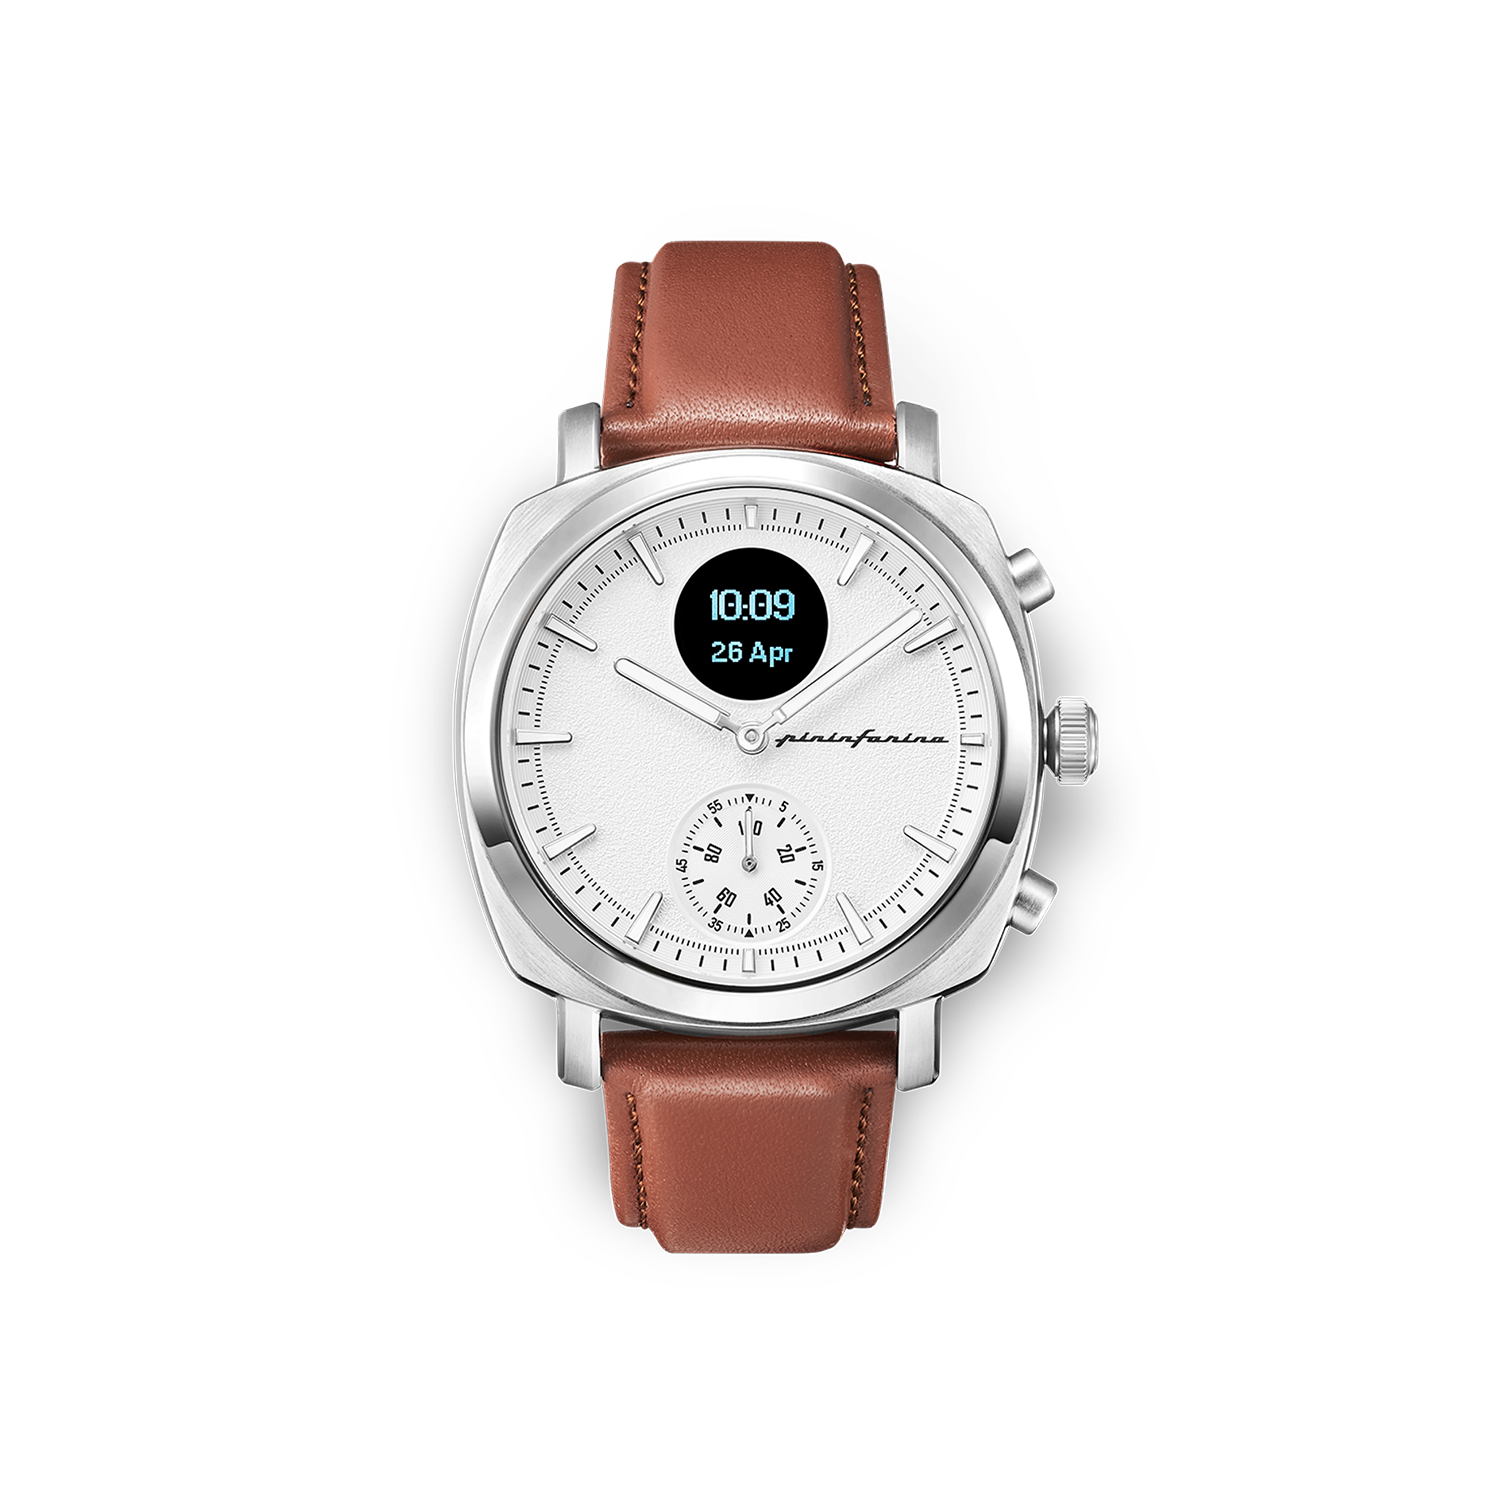 Fossil Watch Hybrid Smartwatch - Accomplice Stainless Steel NDW3A | eBay